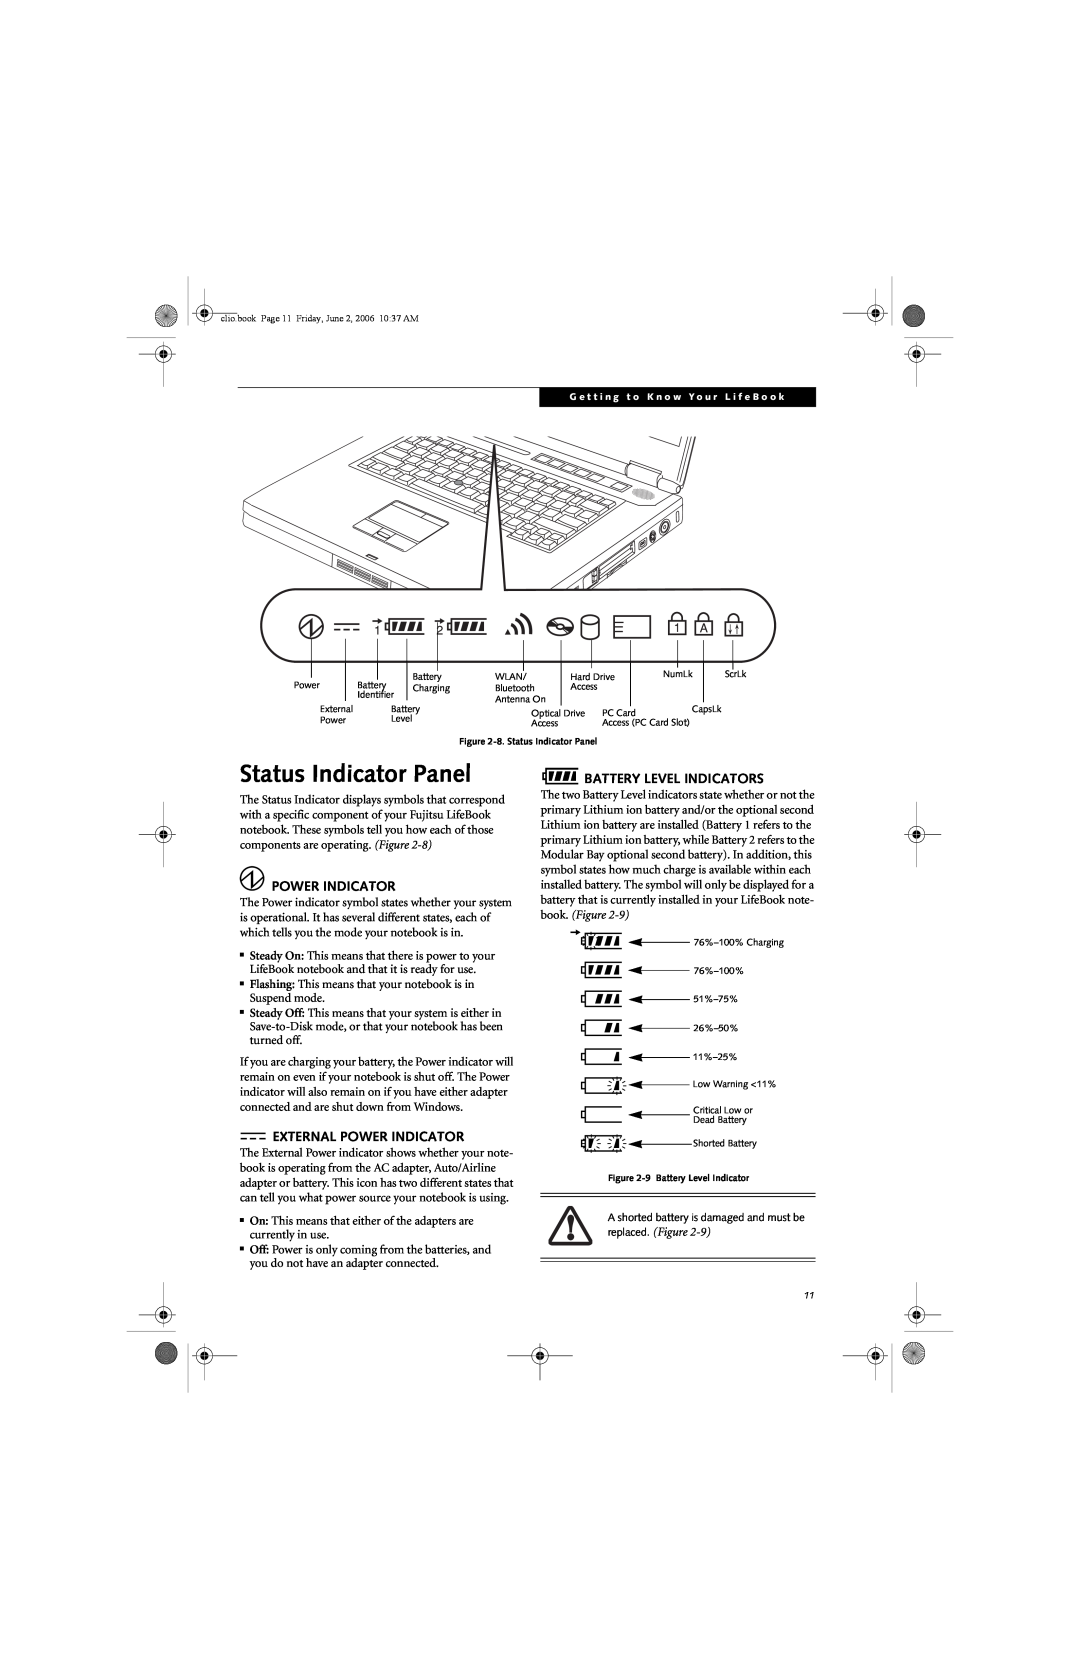 Fujitsu C1410 manual Status Indicator Panel, Battery Level Indicators, External Power Indicator, replaced. Figure 